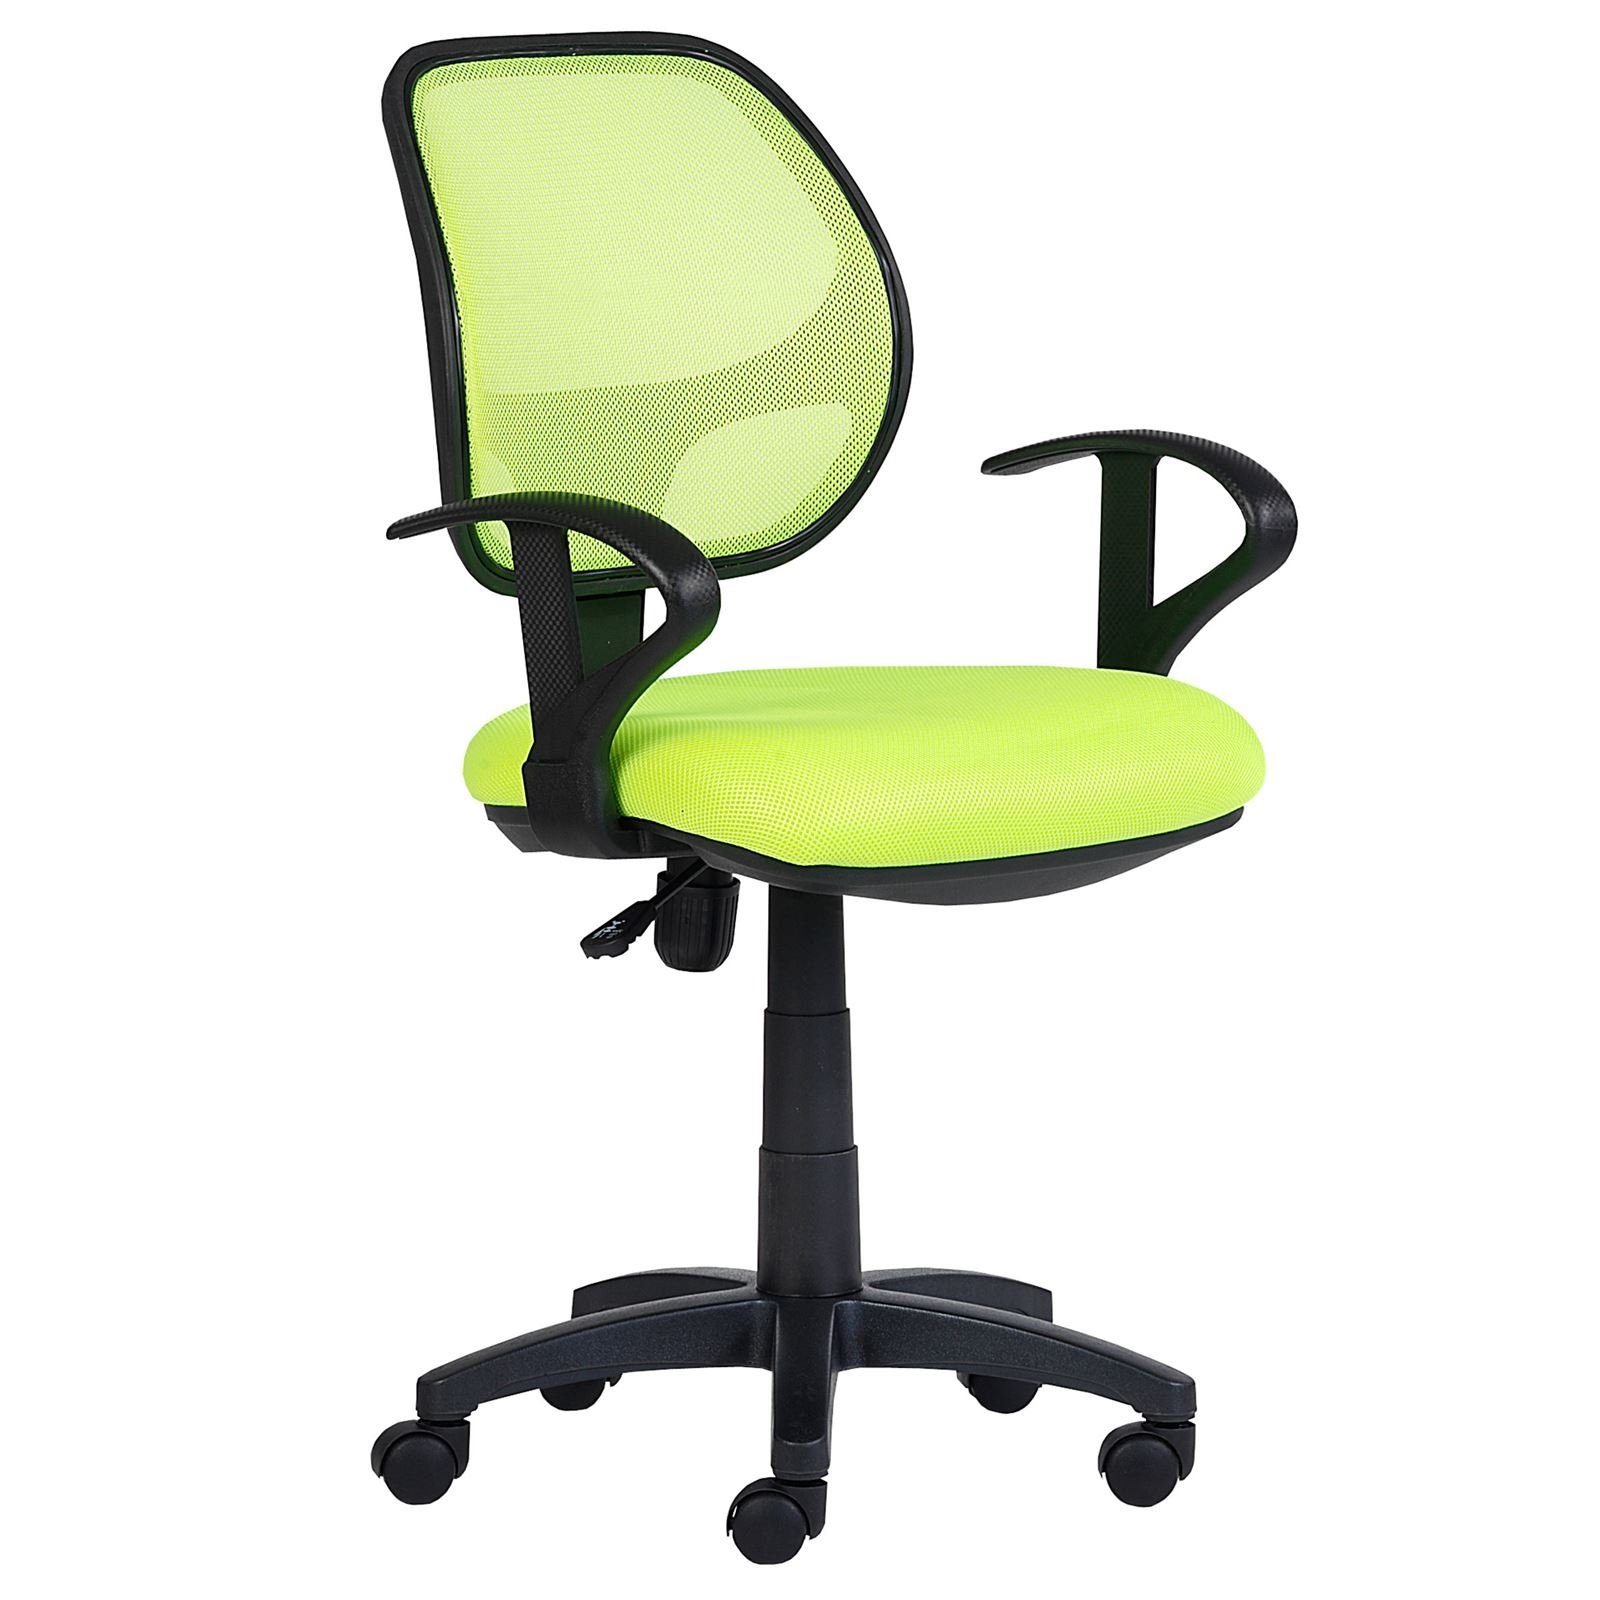 IDIMEX Drehstuhl COOL, Kinderdrehstuhl Schreibtischstuhl Drehstuhl atmungsaktiver Bezug Farba grün